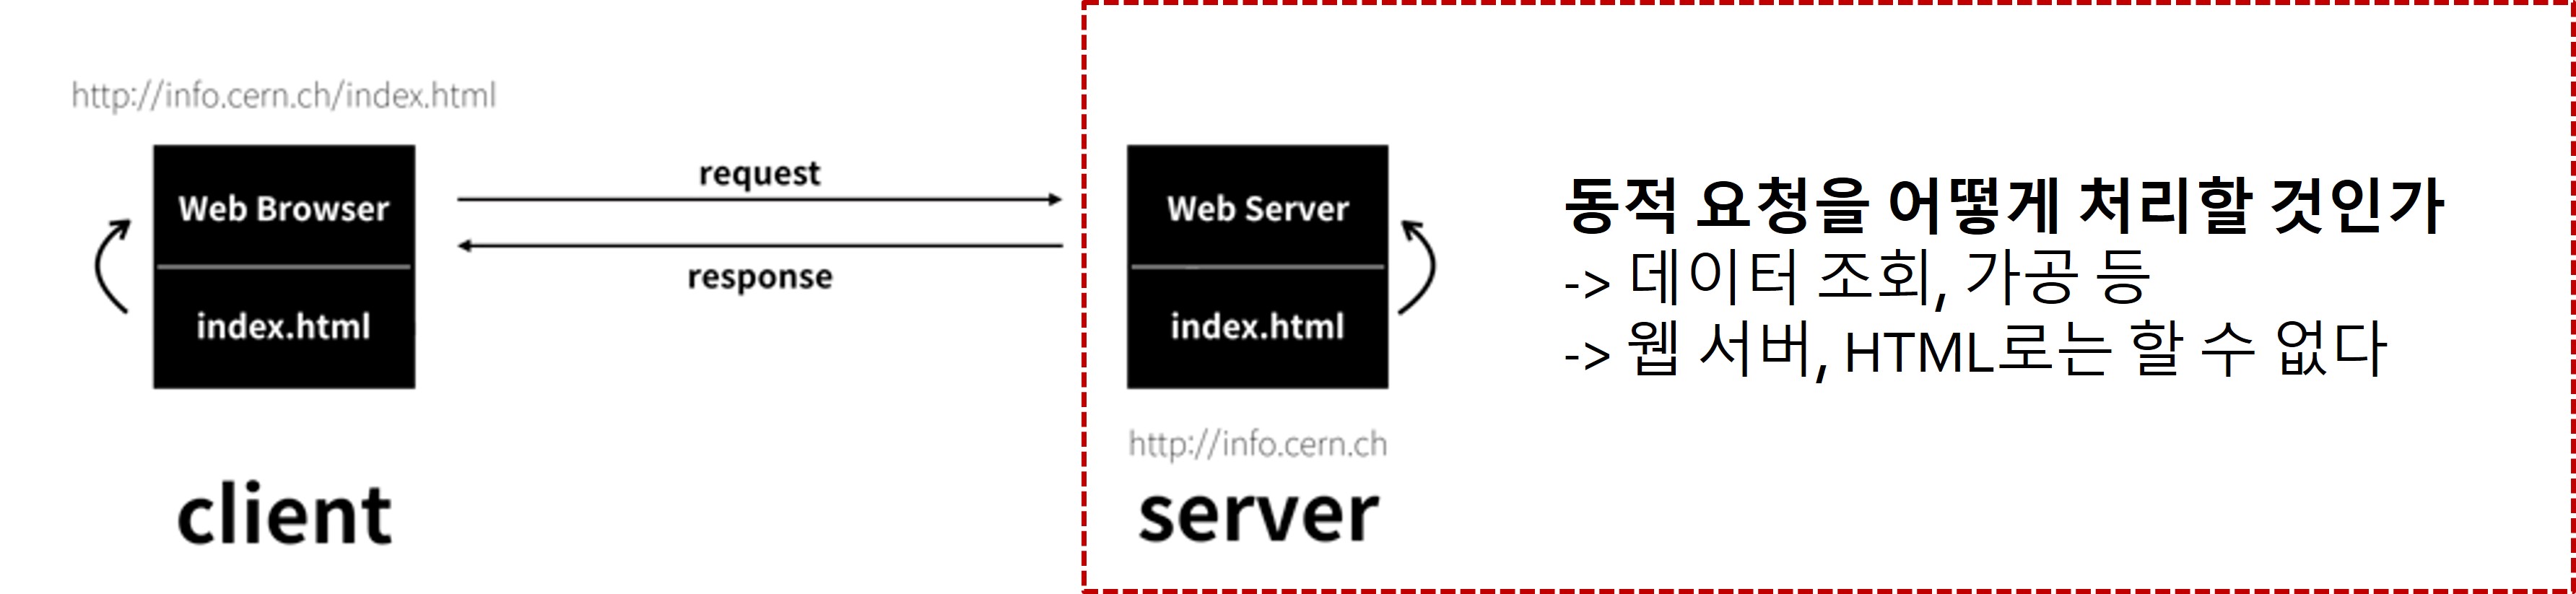 web-server-2